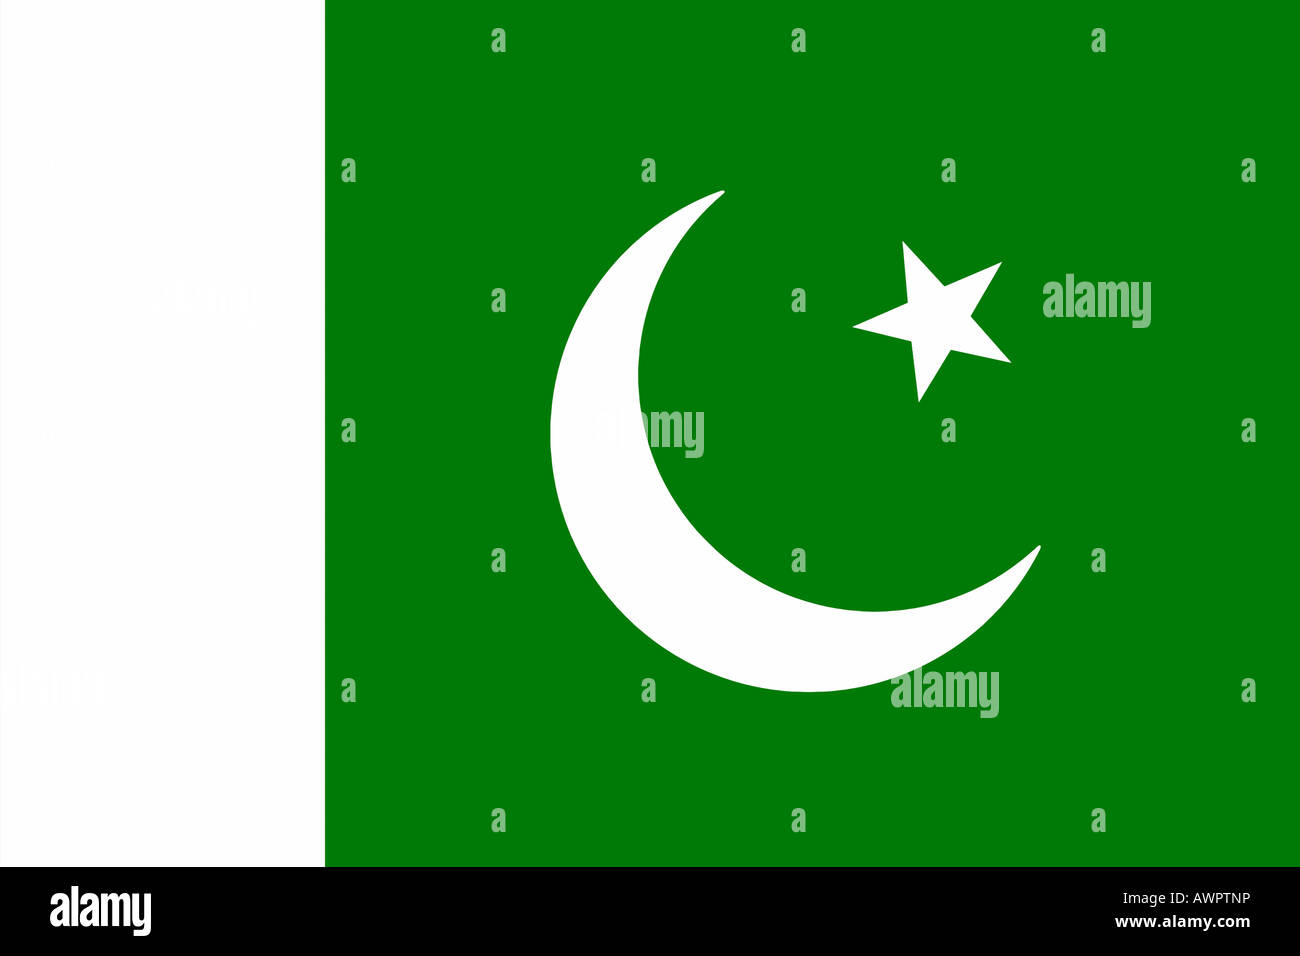 The flag of Pakistan - graphic Stock Photo